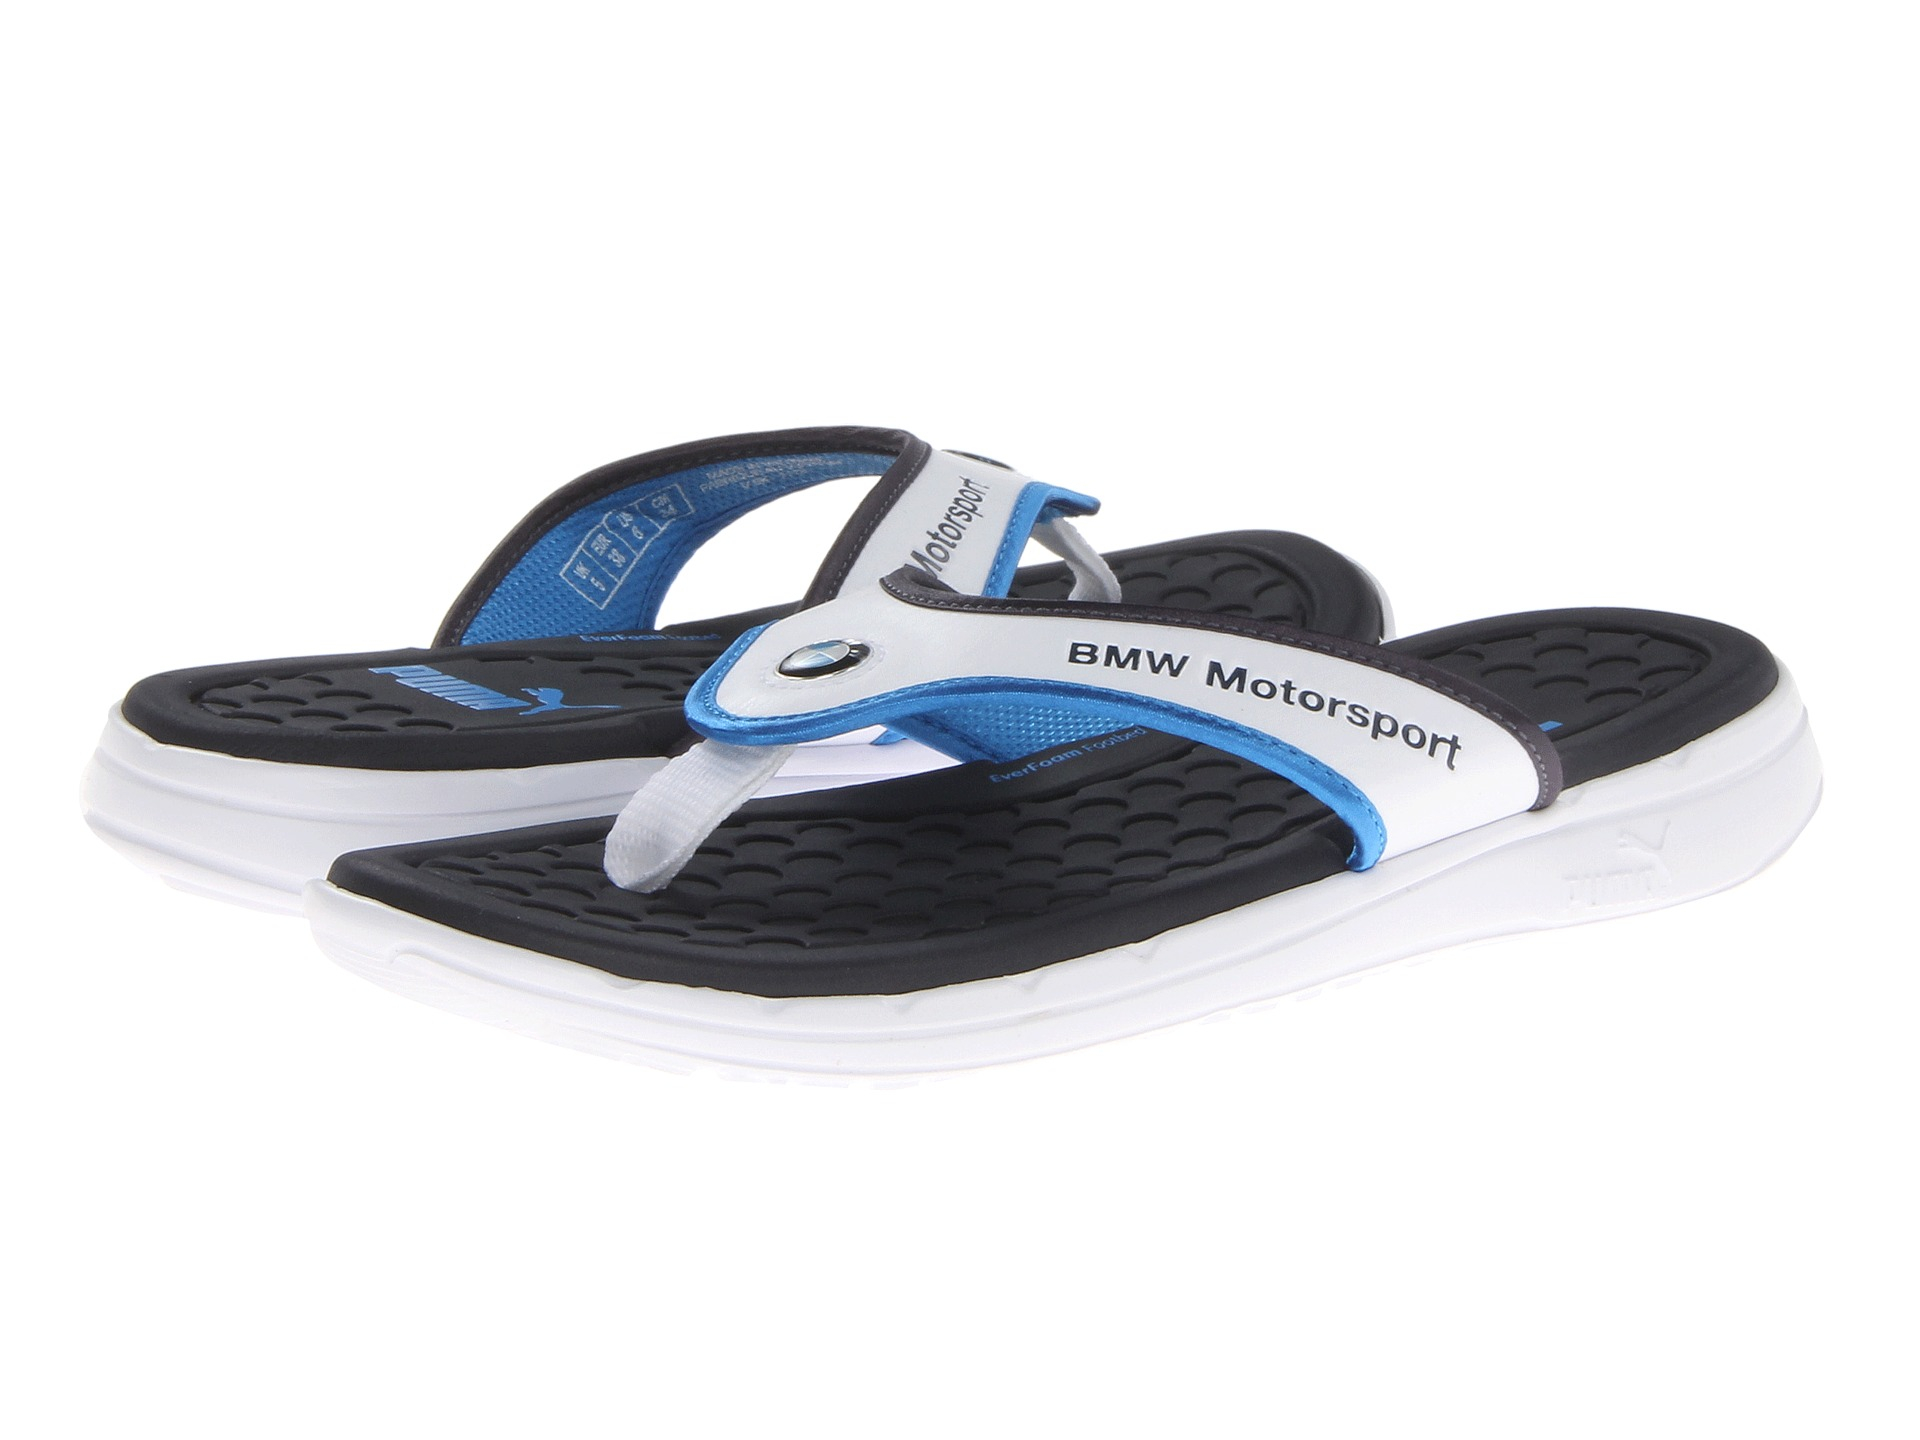 BMW M Power Motorsport Inspired Flip Flops Car Racing Gift Shoes Mens Shoes Sandals Flip Flops & Thongs 